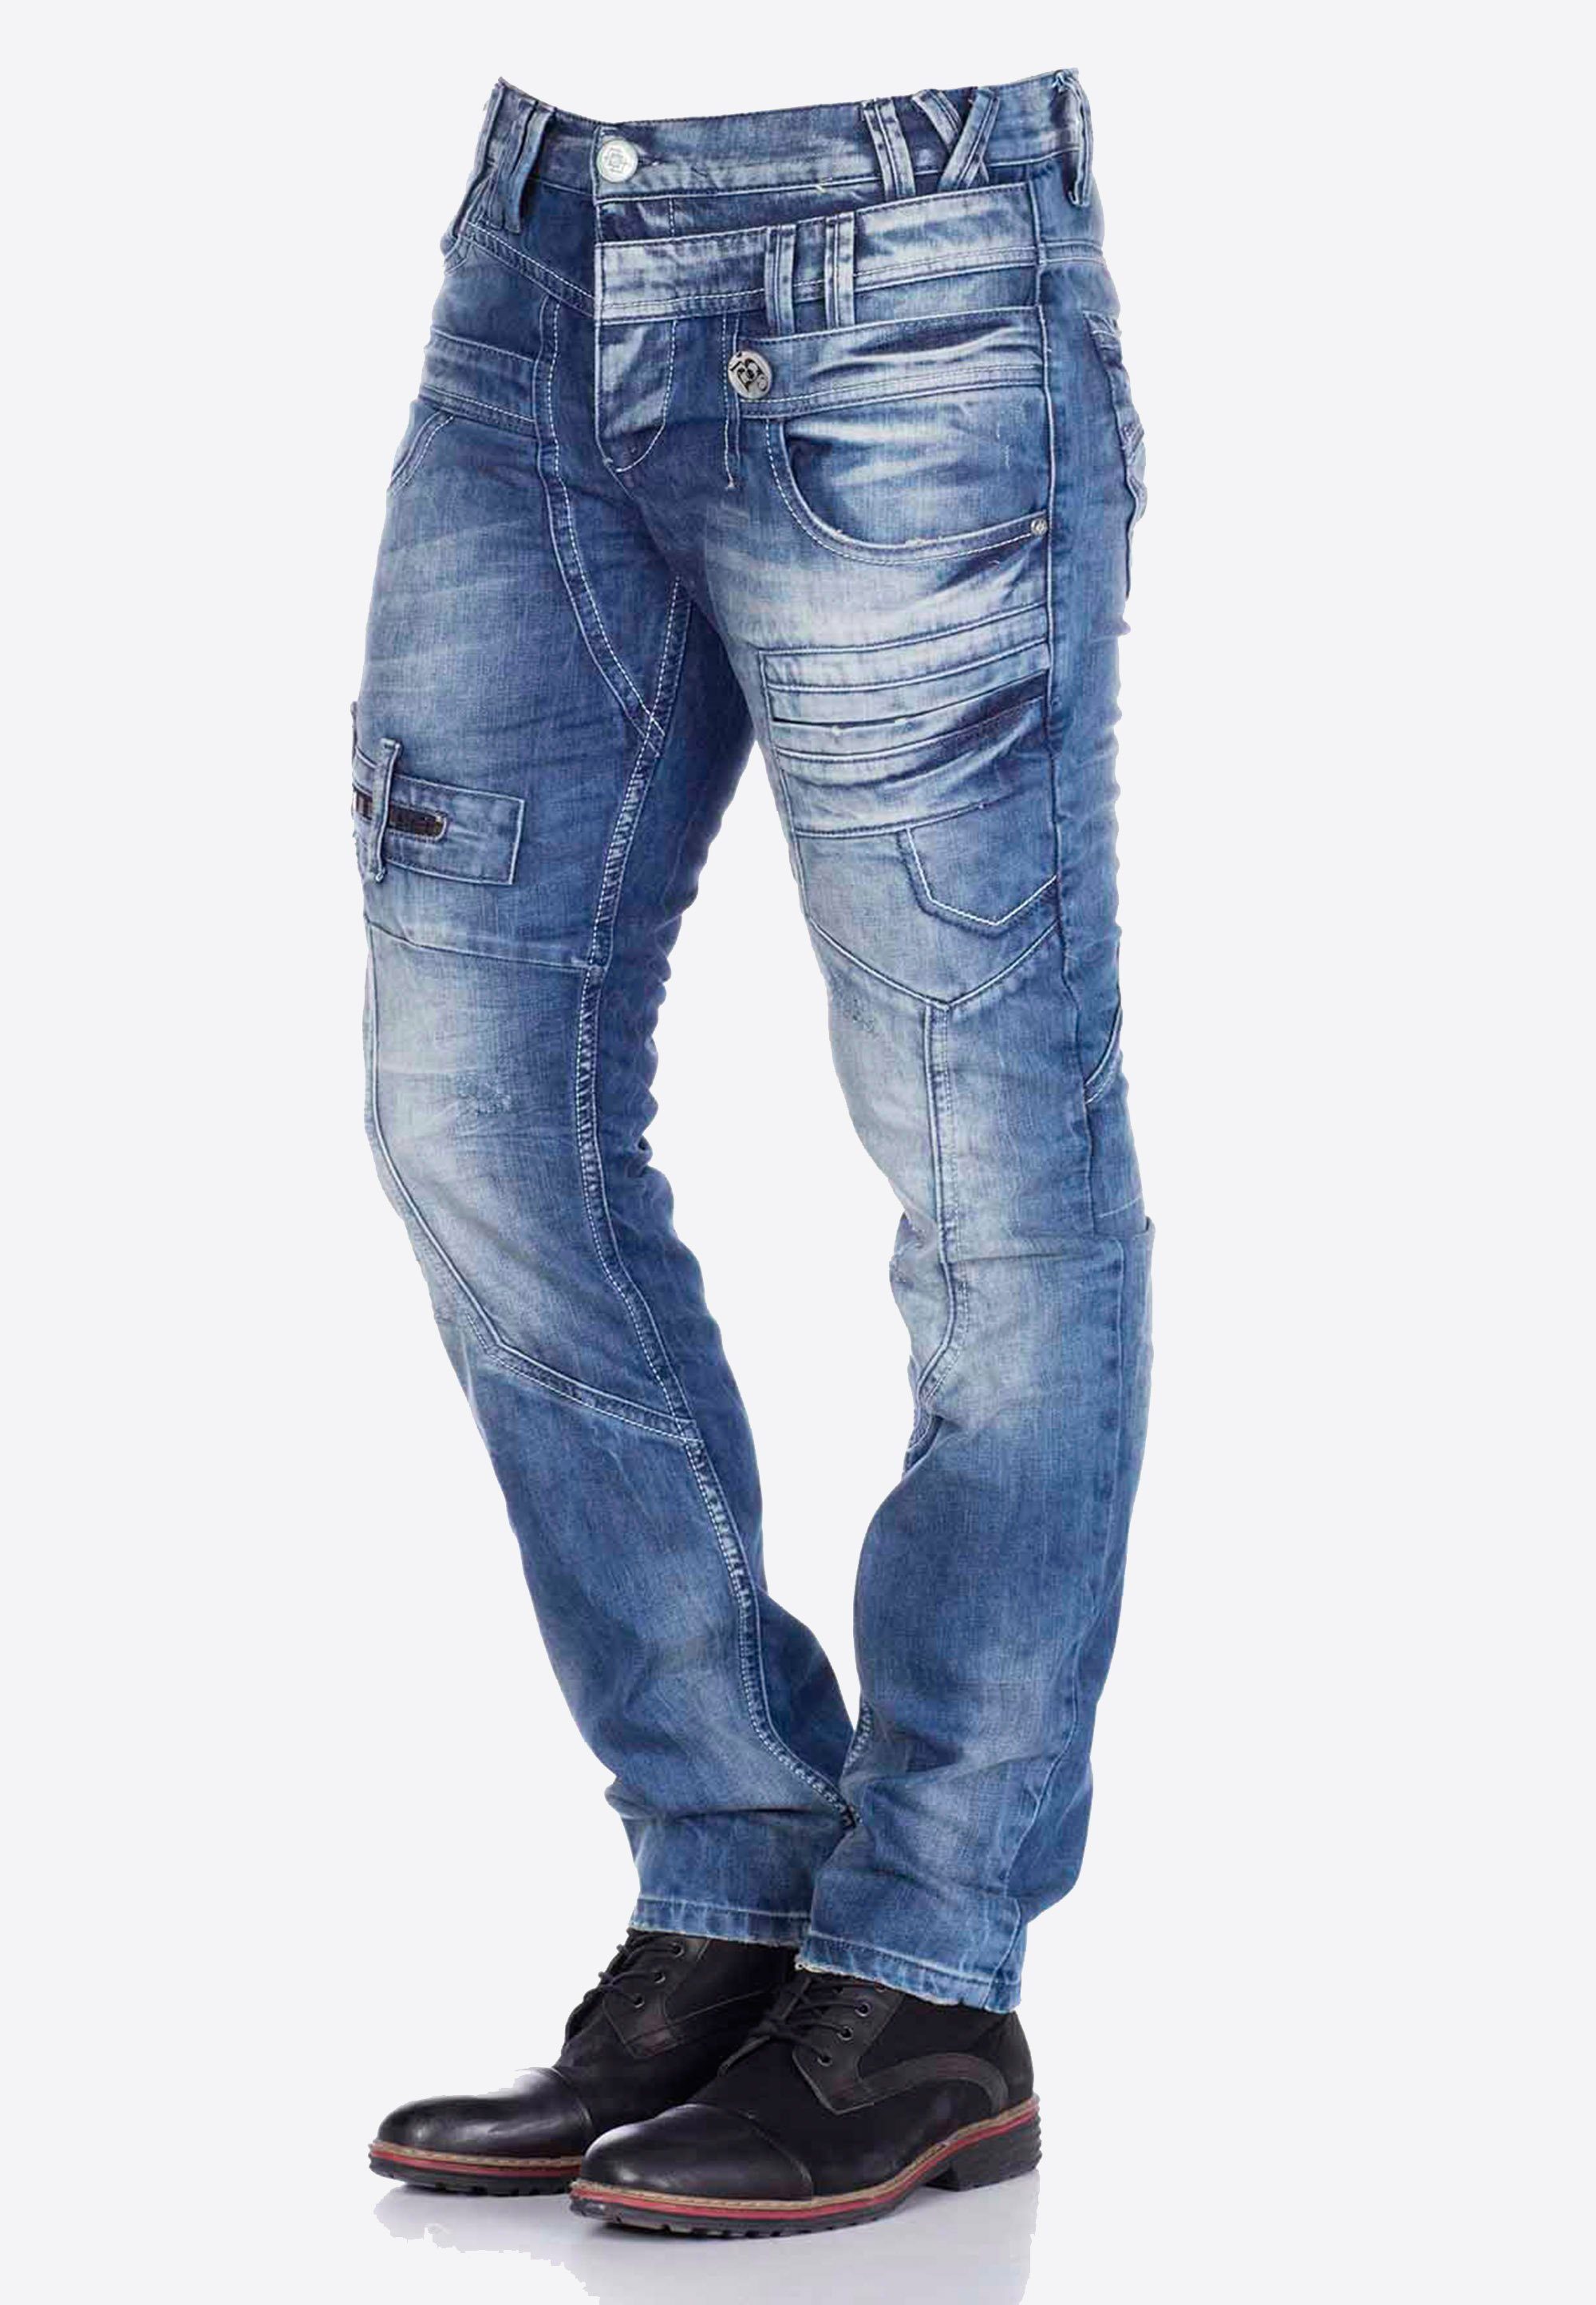 Zier-Elementen & Bequeme Cipo mit Baxx coolen Jeans